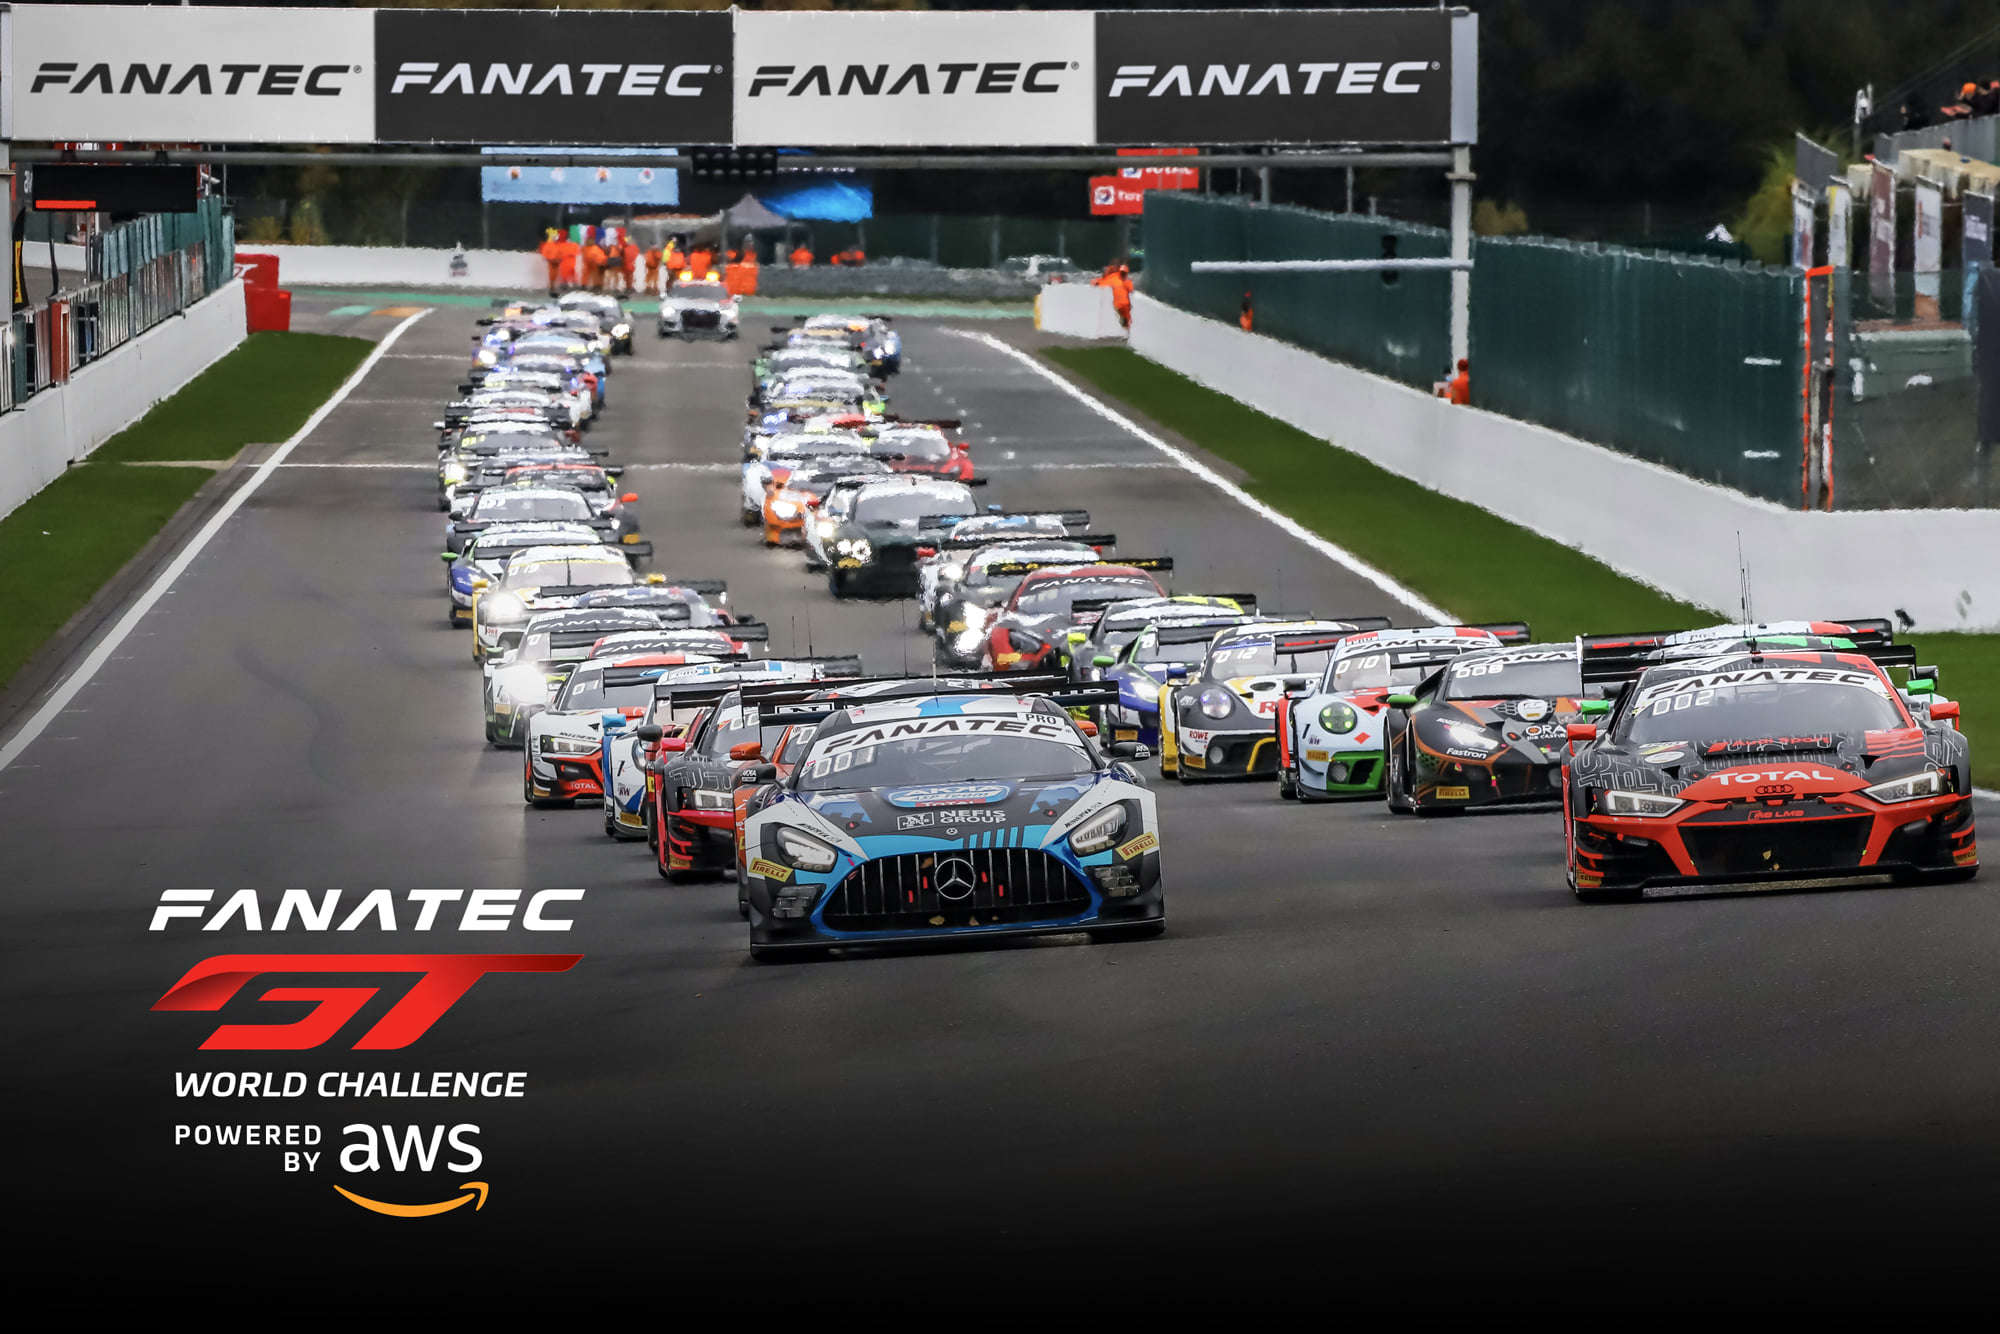 More information about "Fanatec sponsor del GT World Challenge, nasce la serie virtuale onsite"